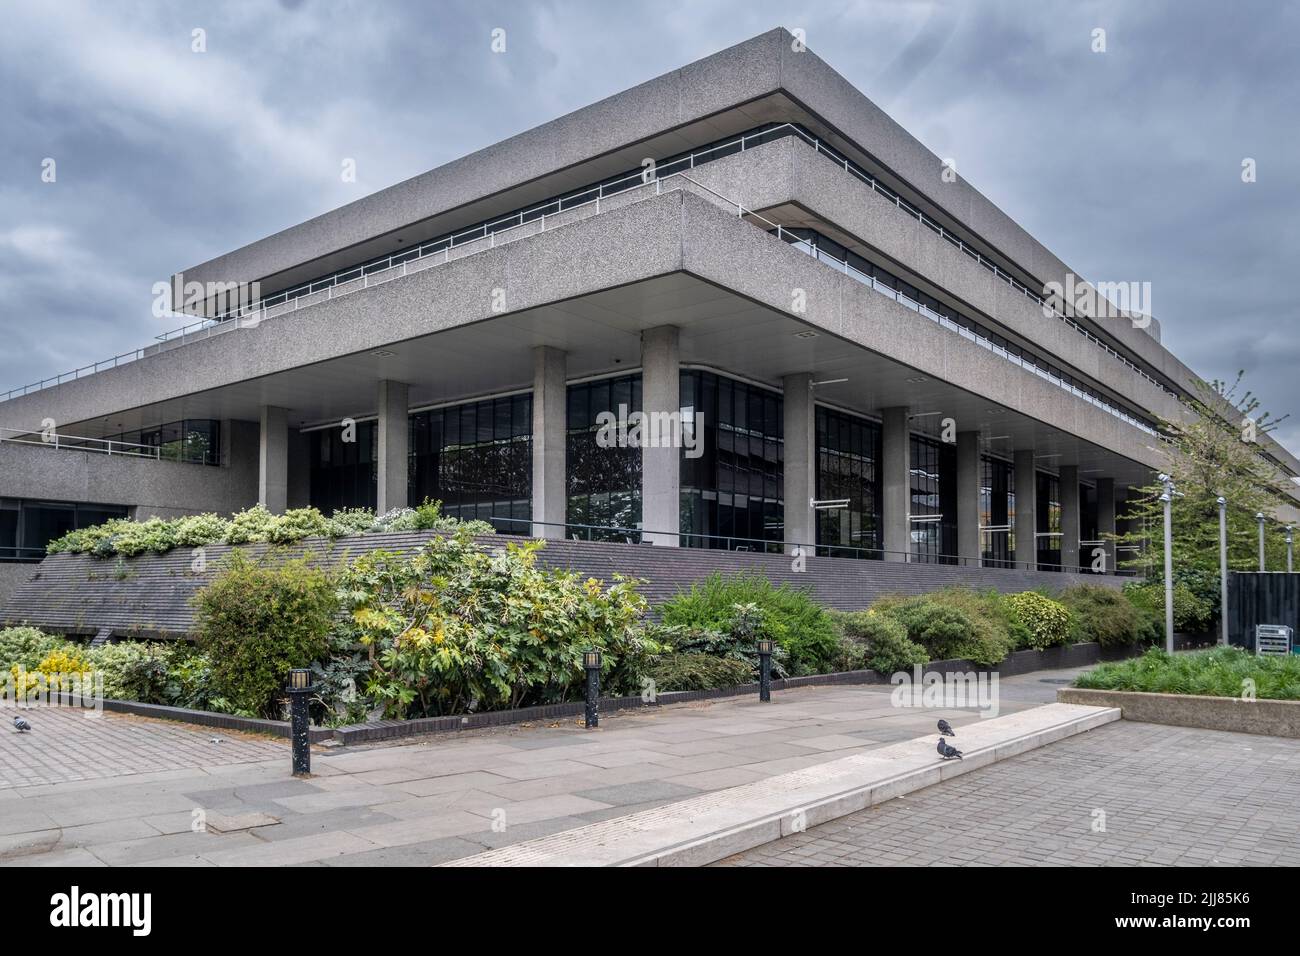 The Podium, headquarters of IBM UK, at Waterloo in London, England Stock Photo